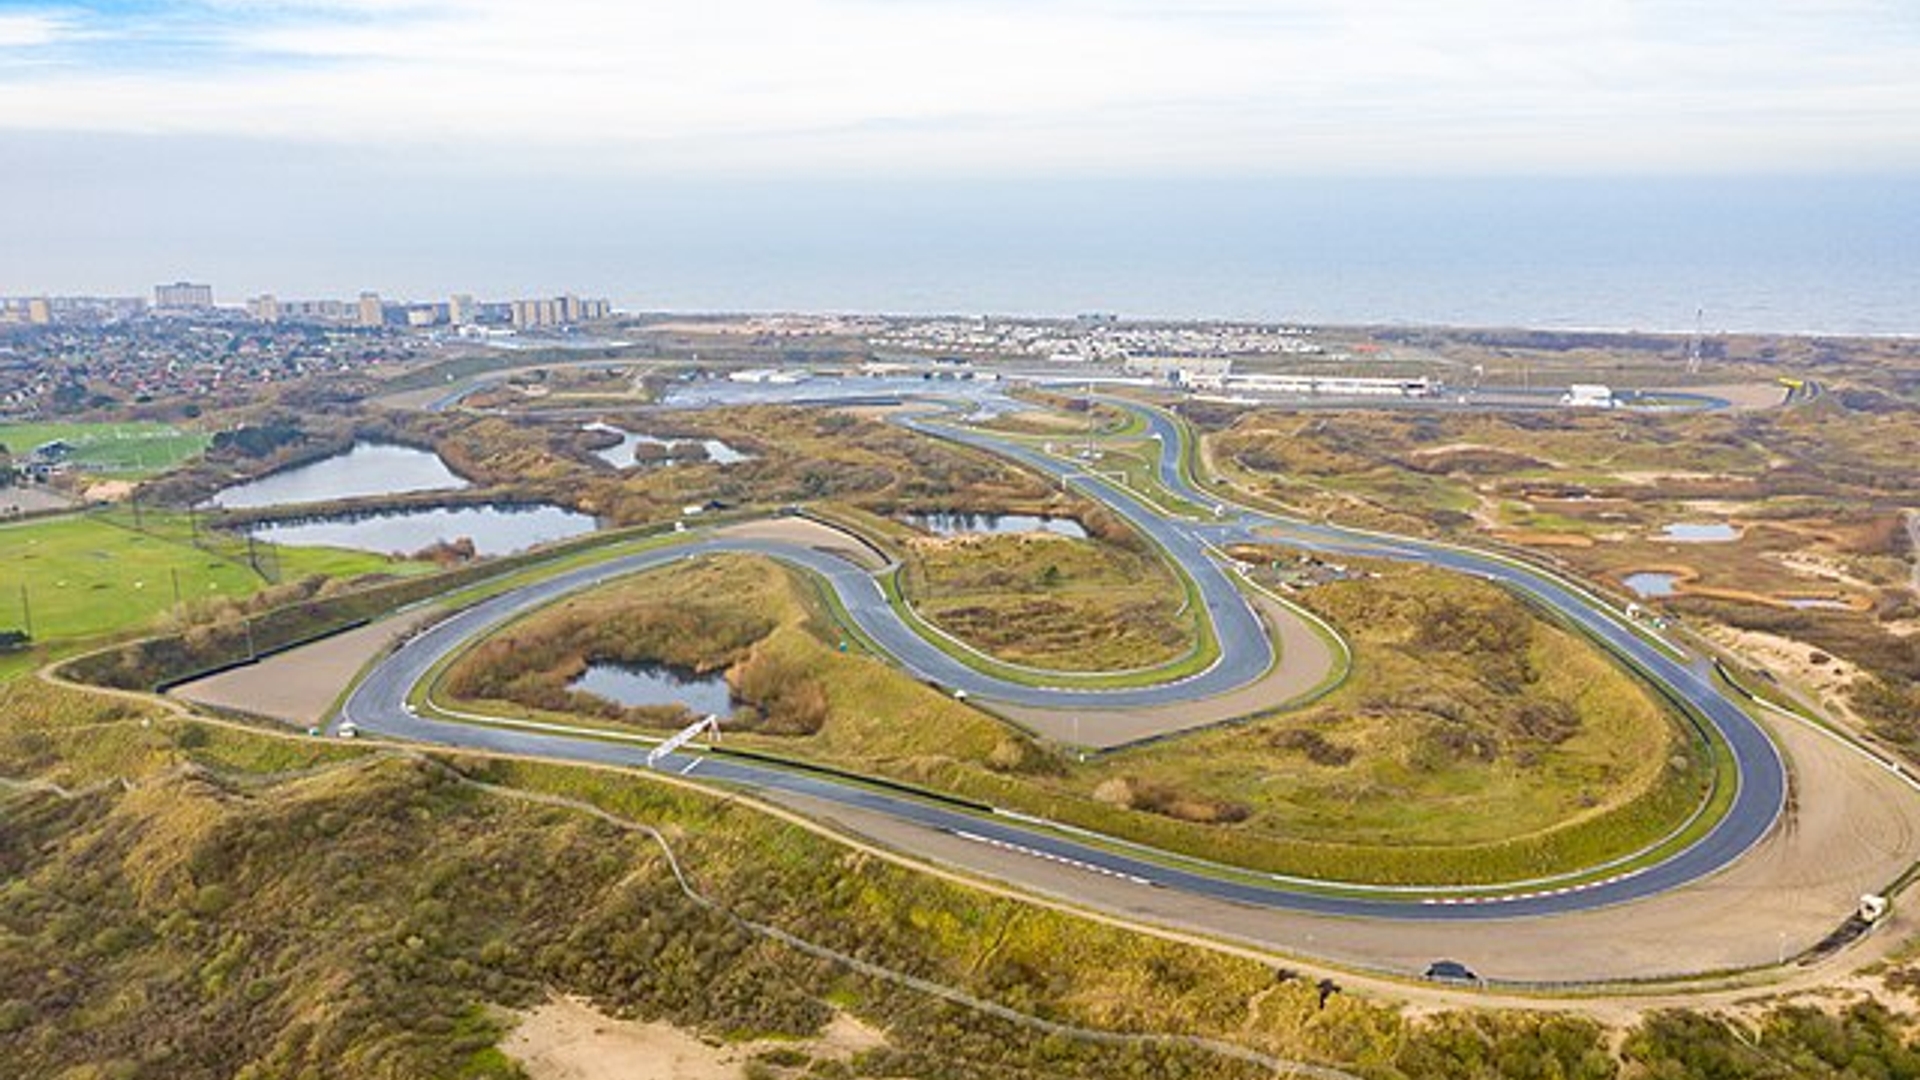 640px-Circuit_Zandvoort_motorsport_race_track_in_the_Netherlands_(46940292845)